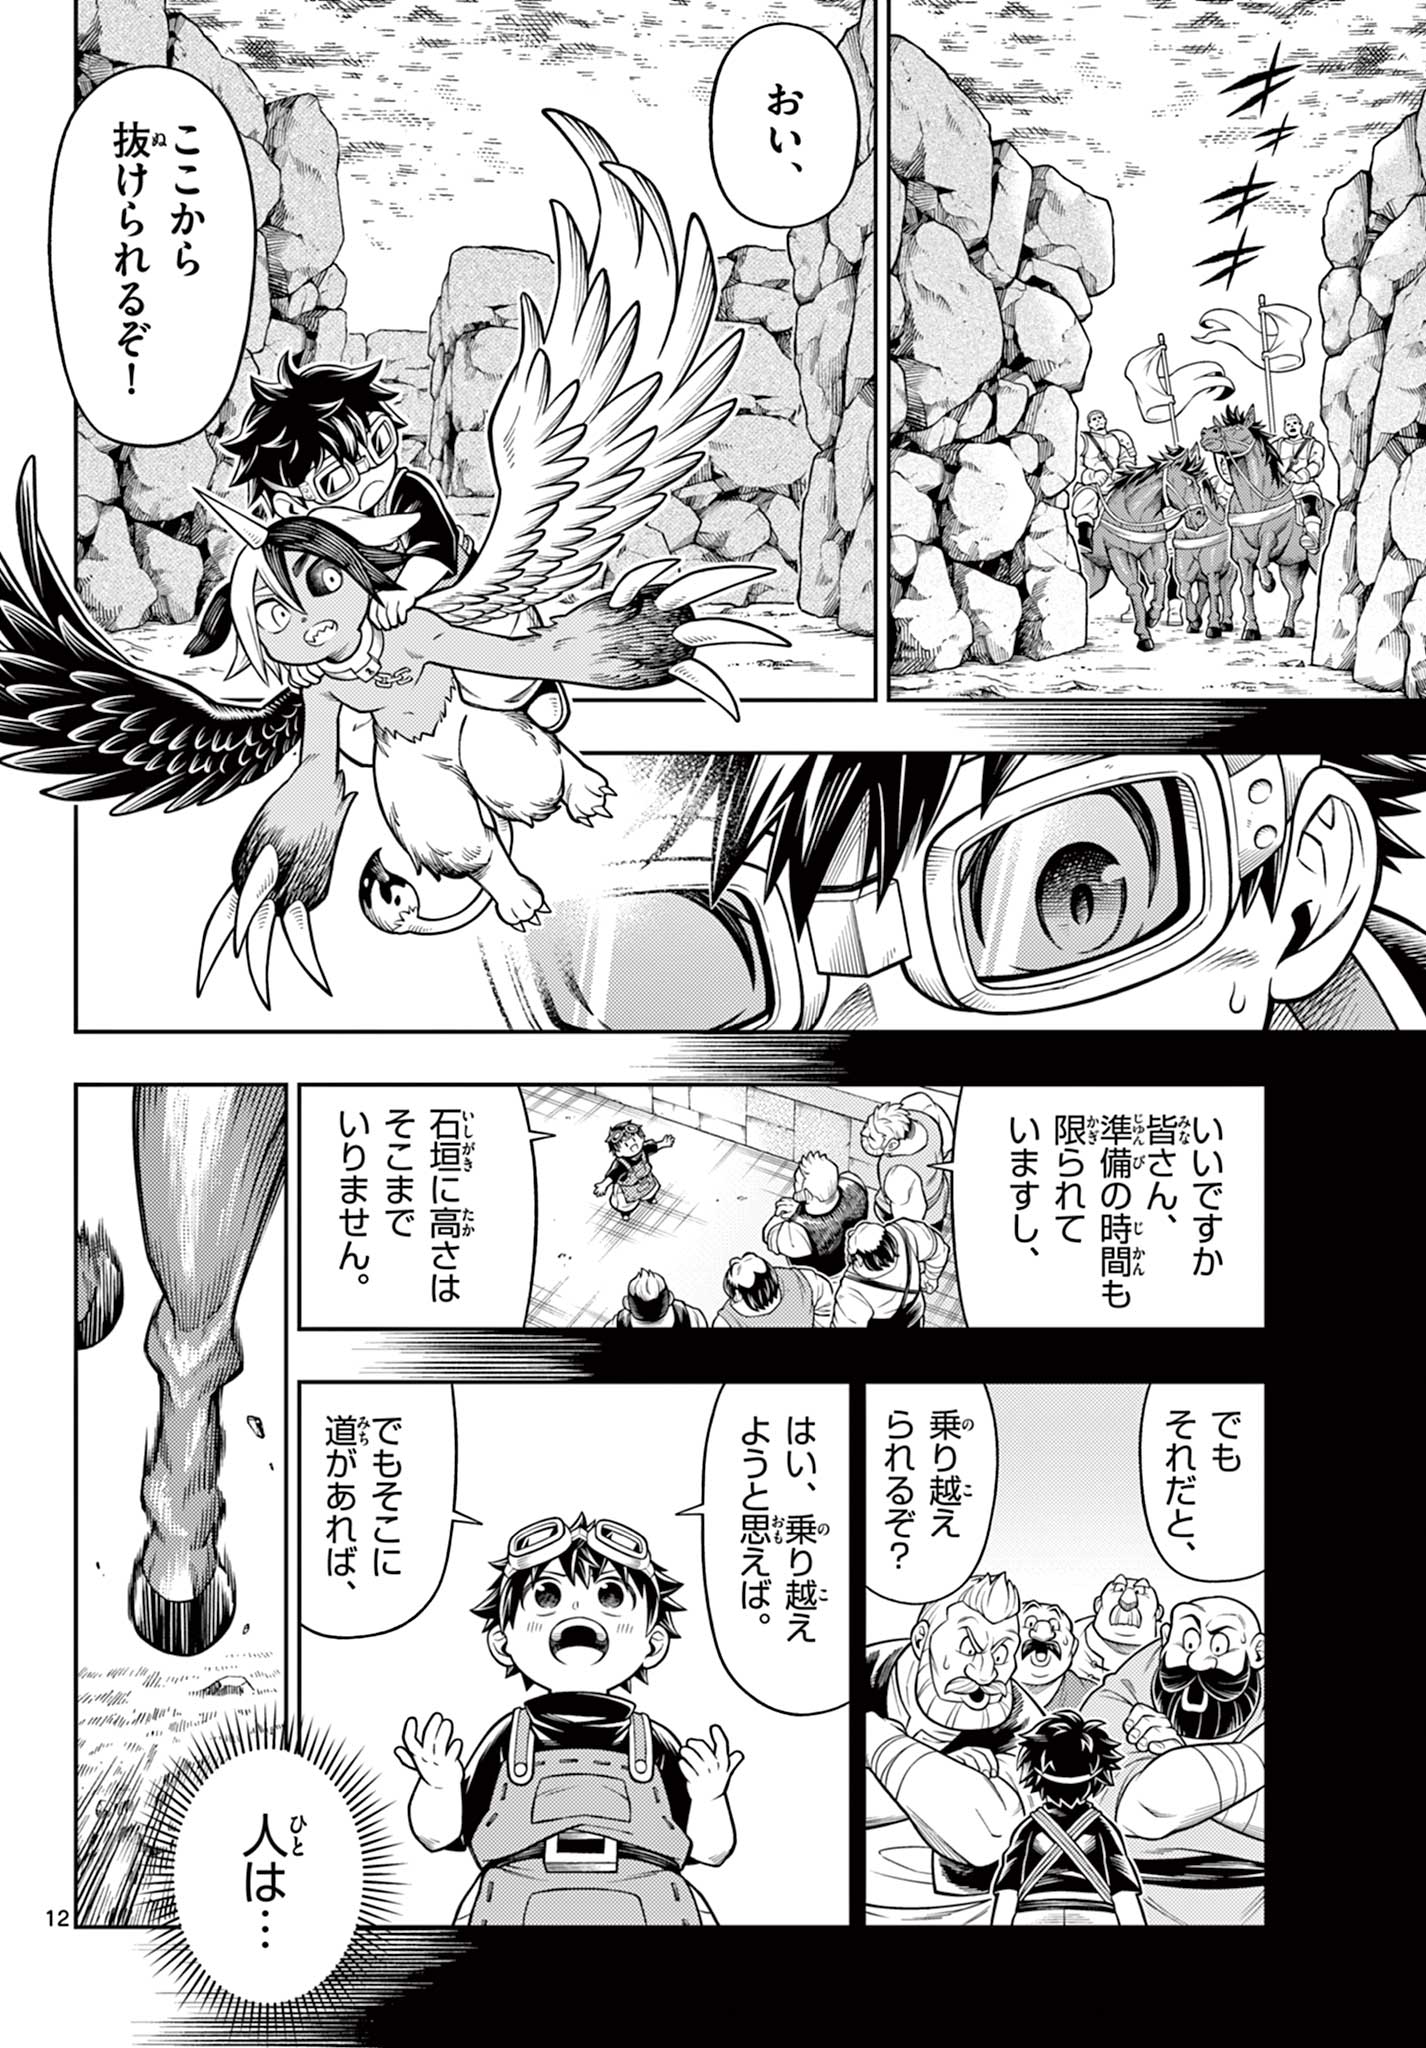 Soara to Mamono no ie - Chapter 27 - Page 12